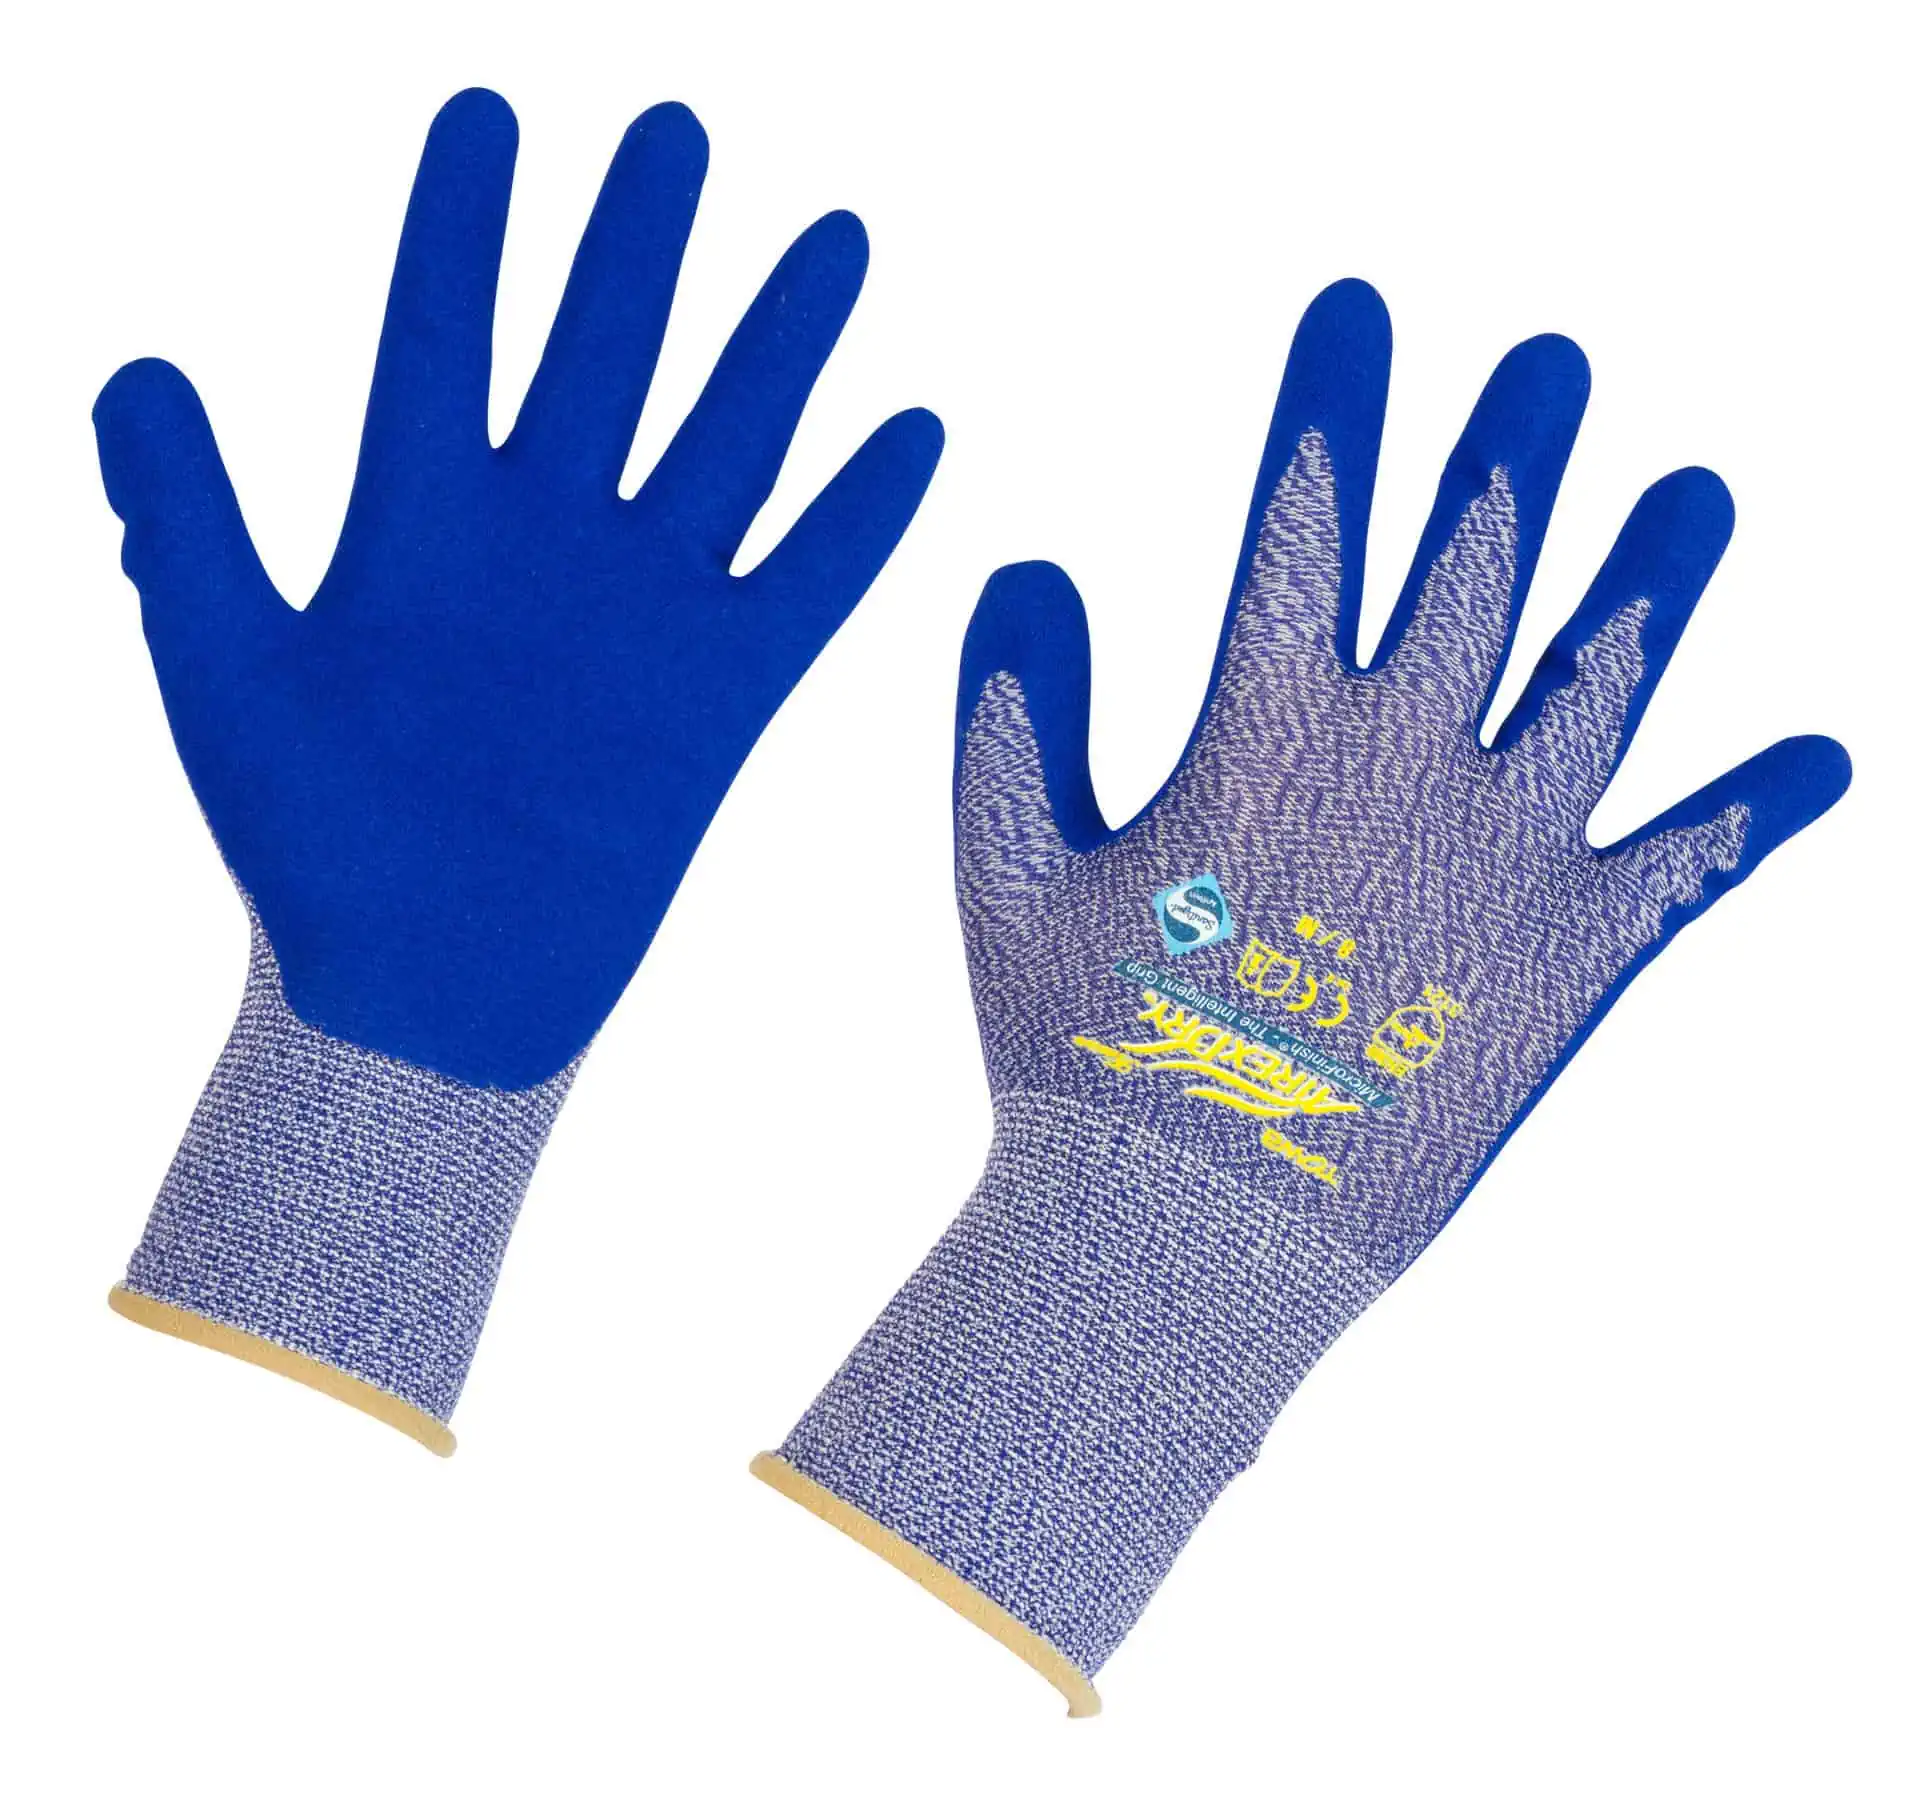 Nylon glove AirexDry, size 10 (XL), with nitrile